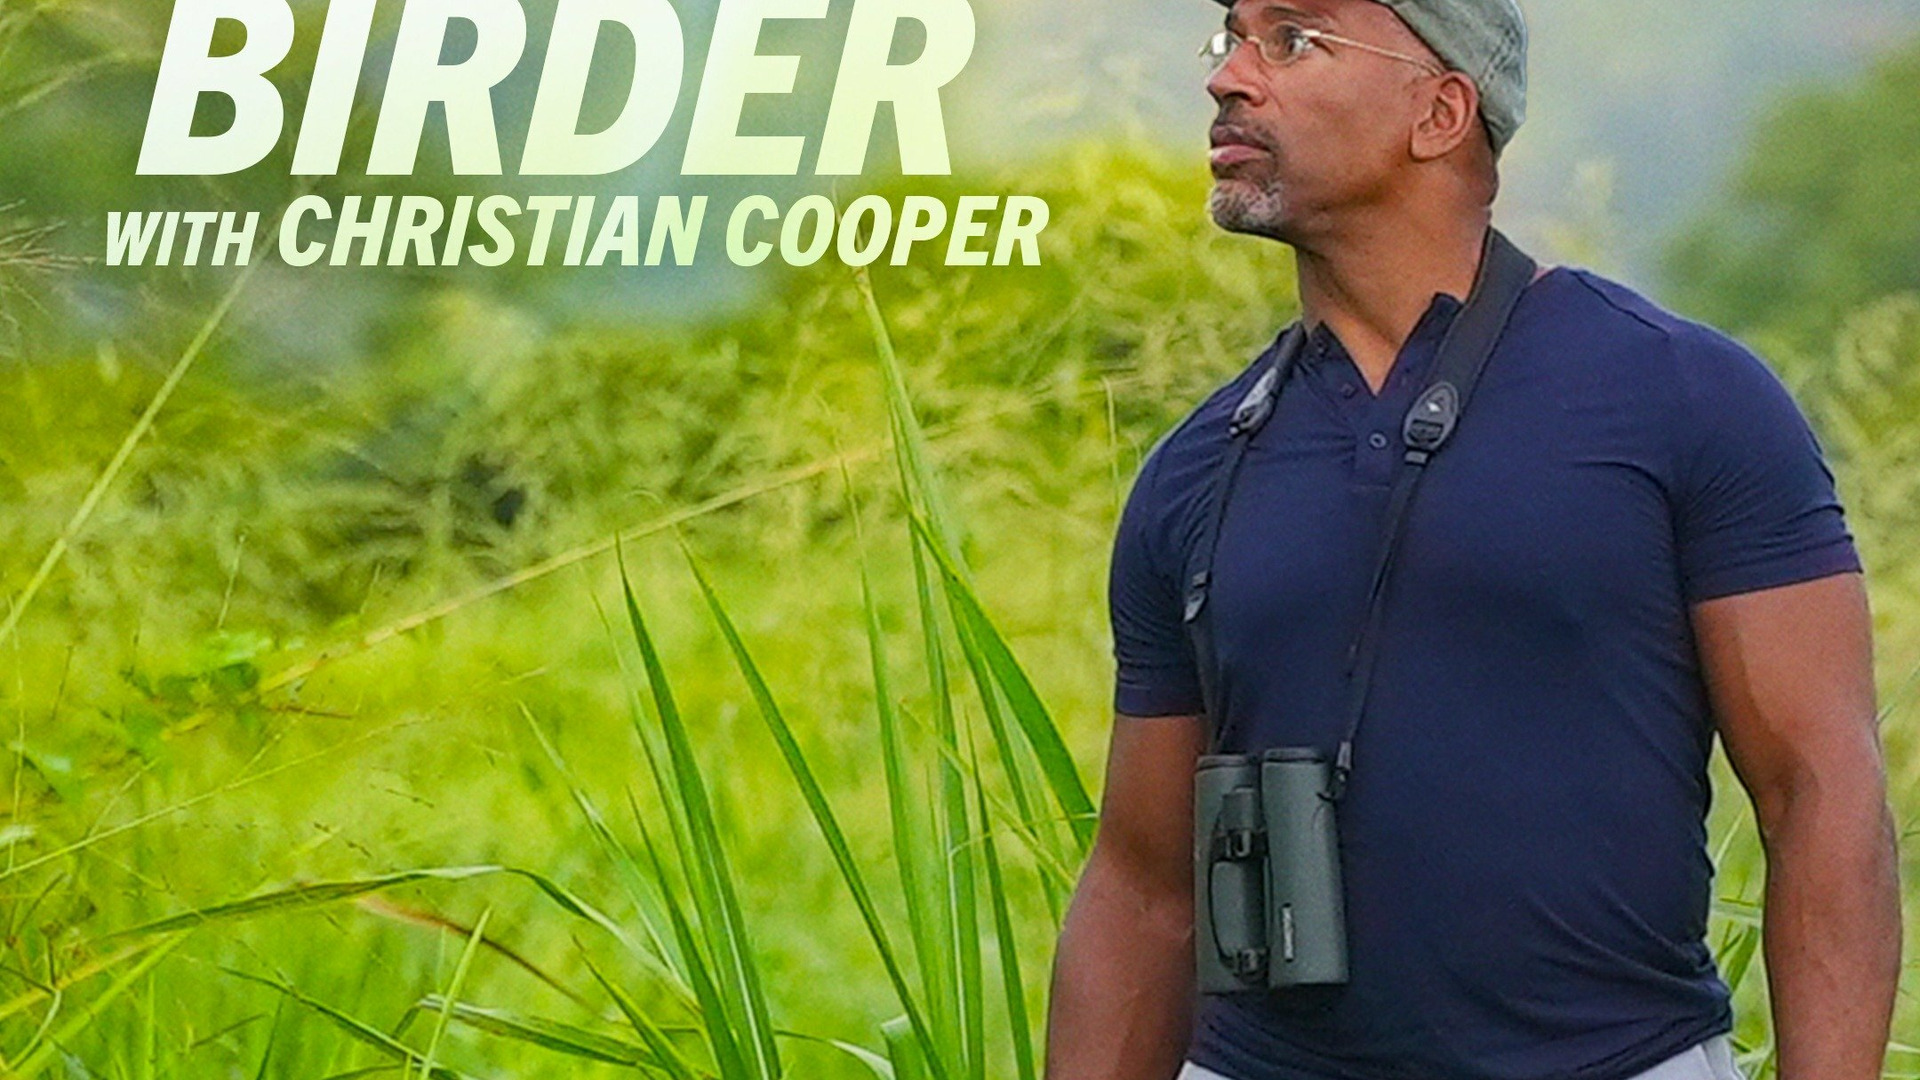 Show Extraordinary Birder with Christian Cooper